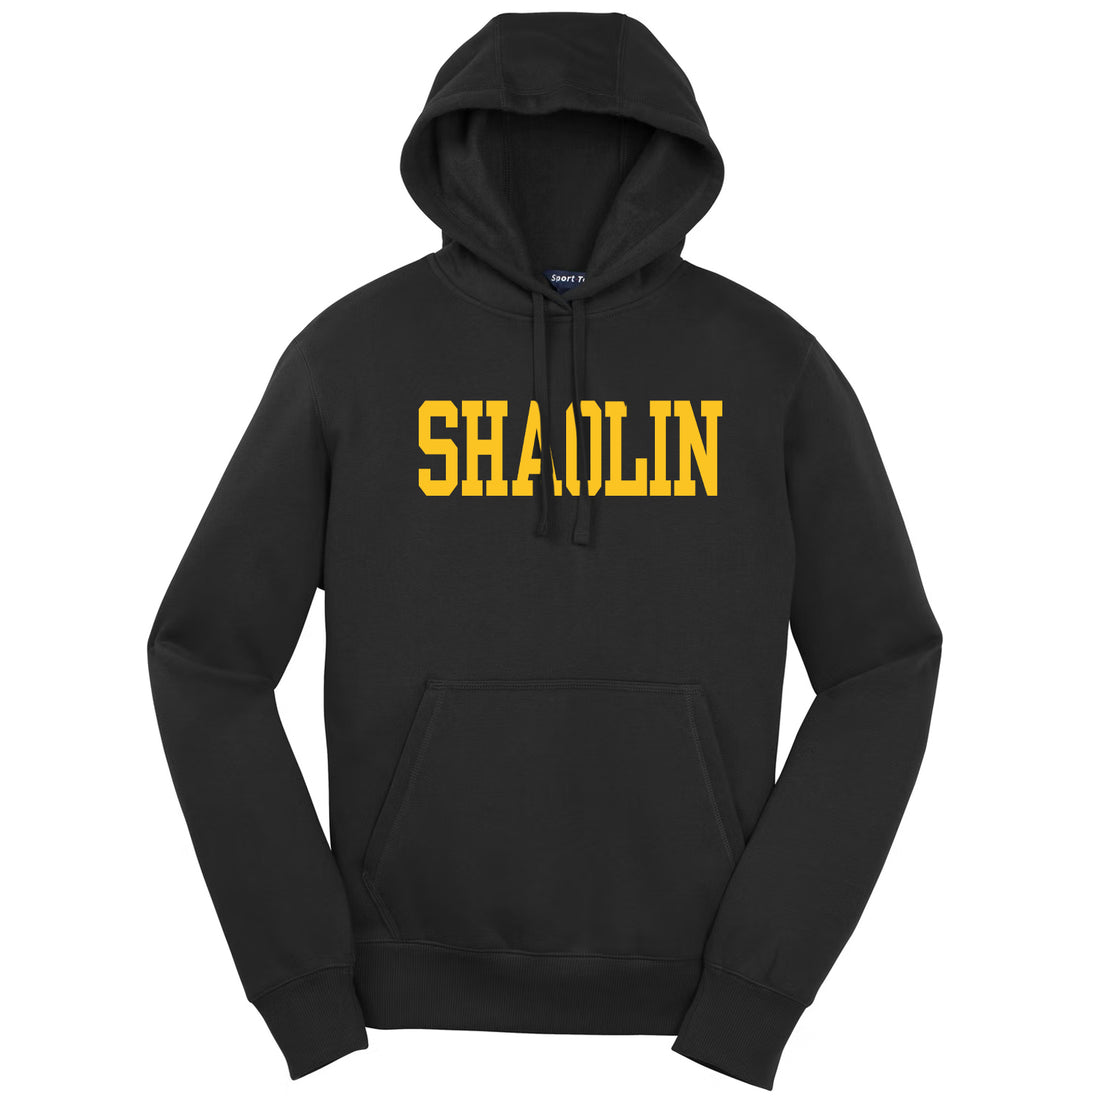 Shaolin Collegiate Hooded Sweatshirt